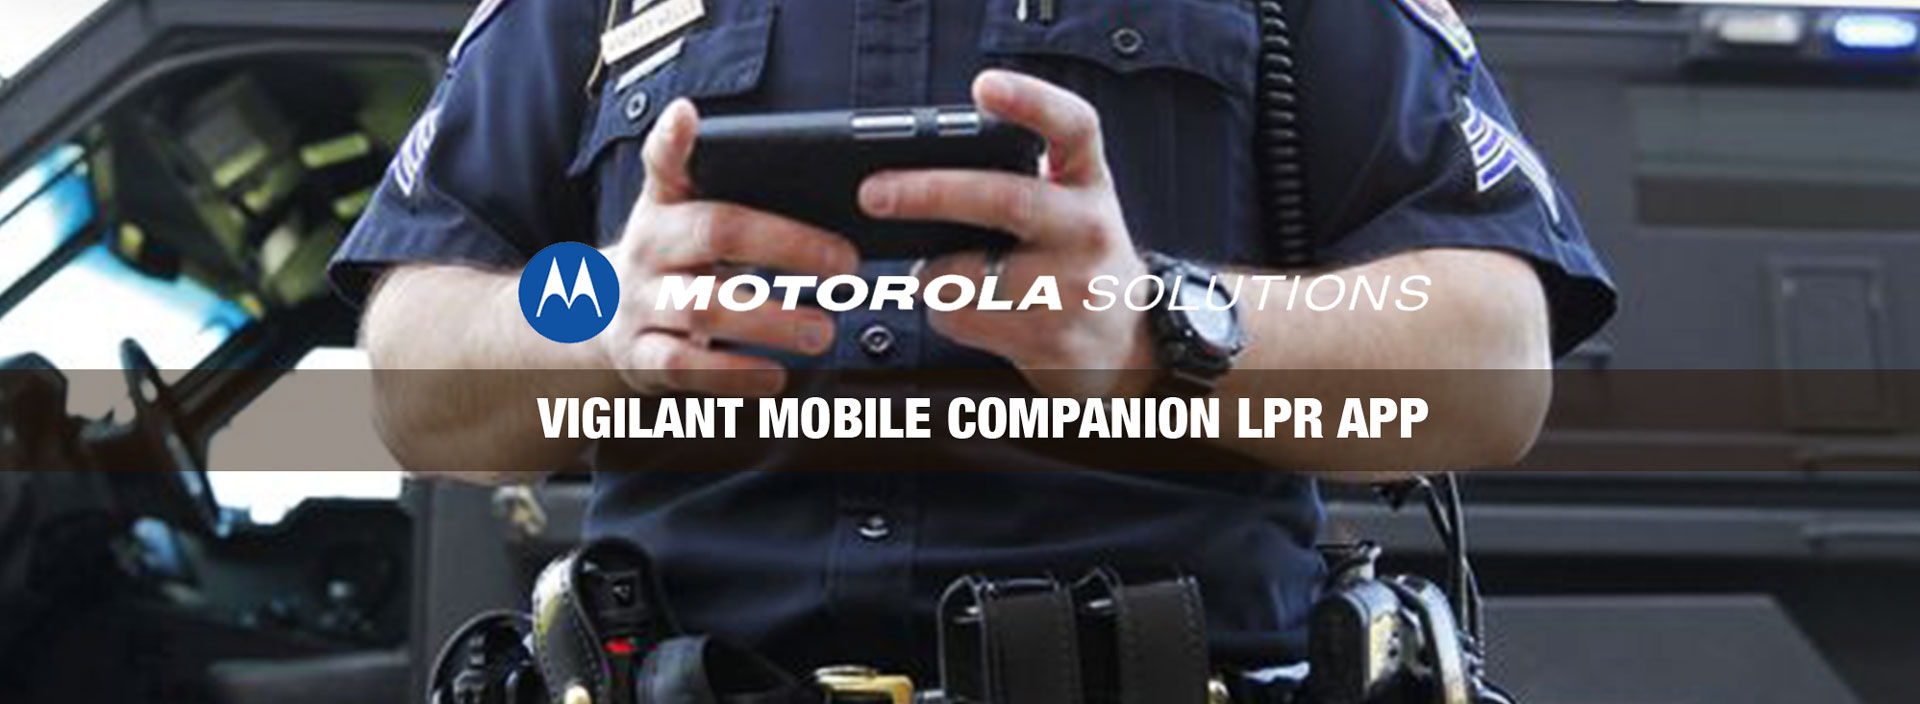 Motorola Solutions Mobile Companion